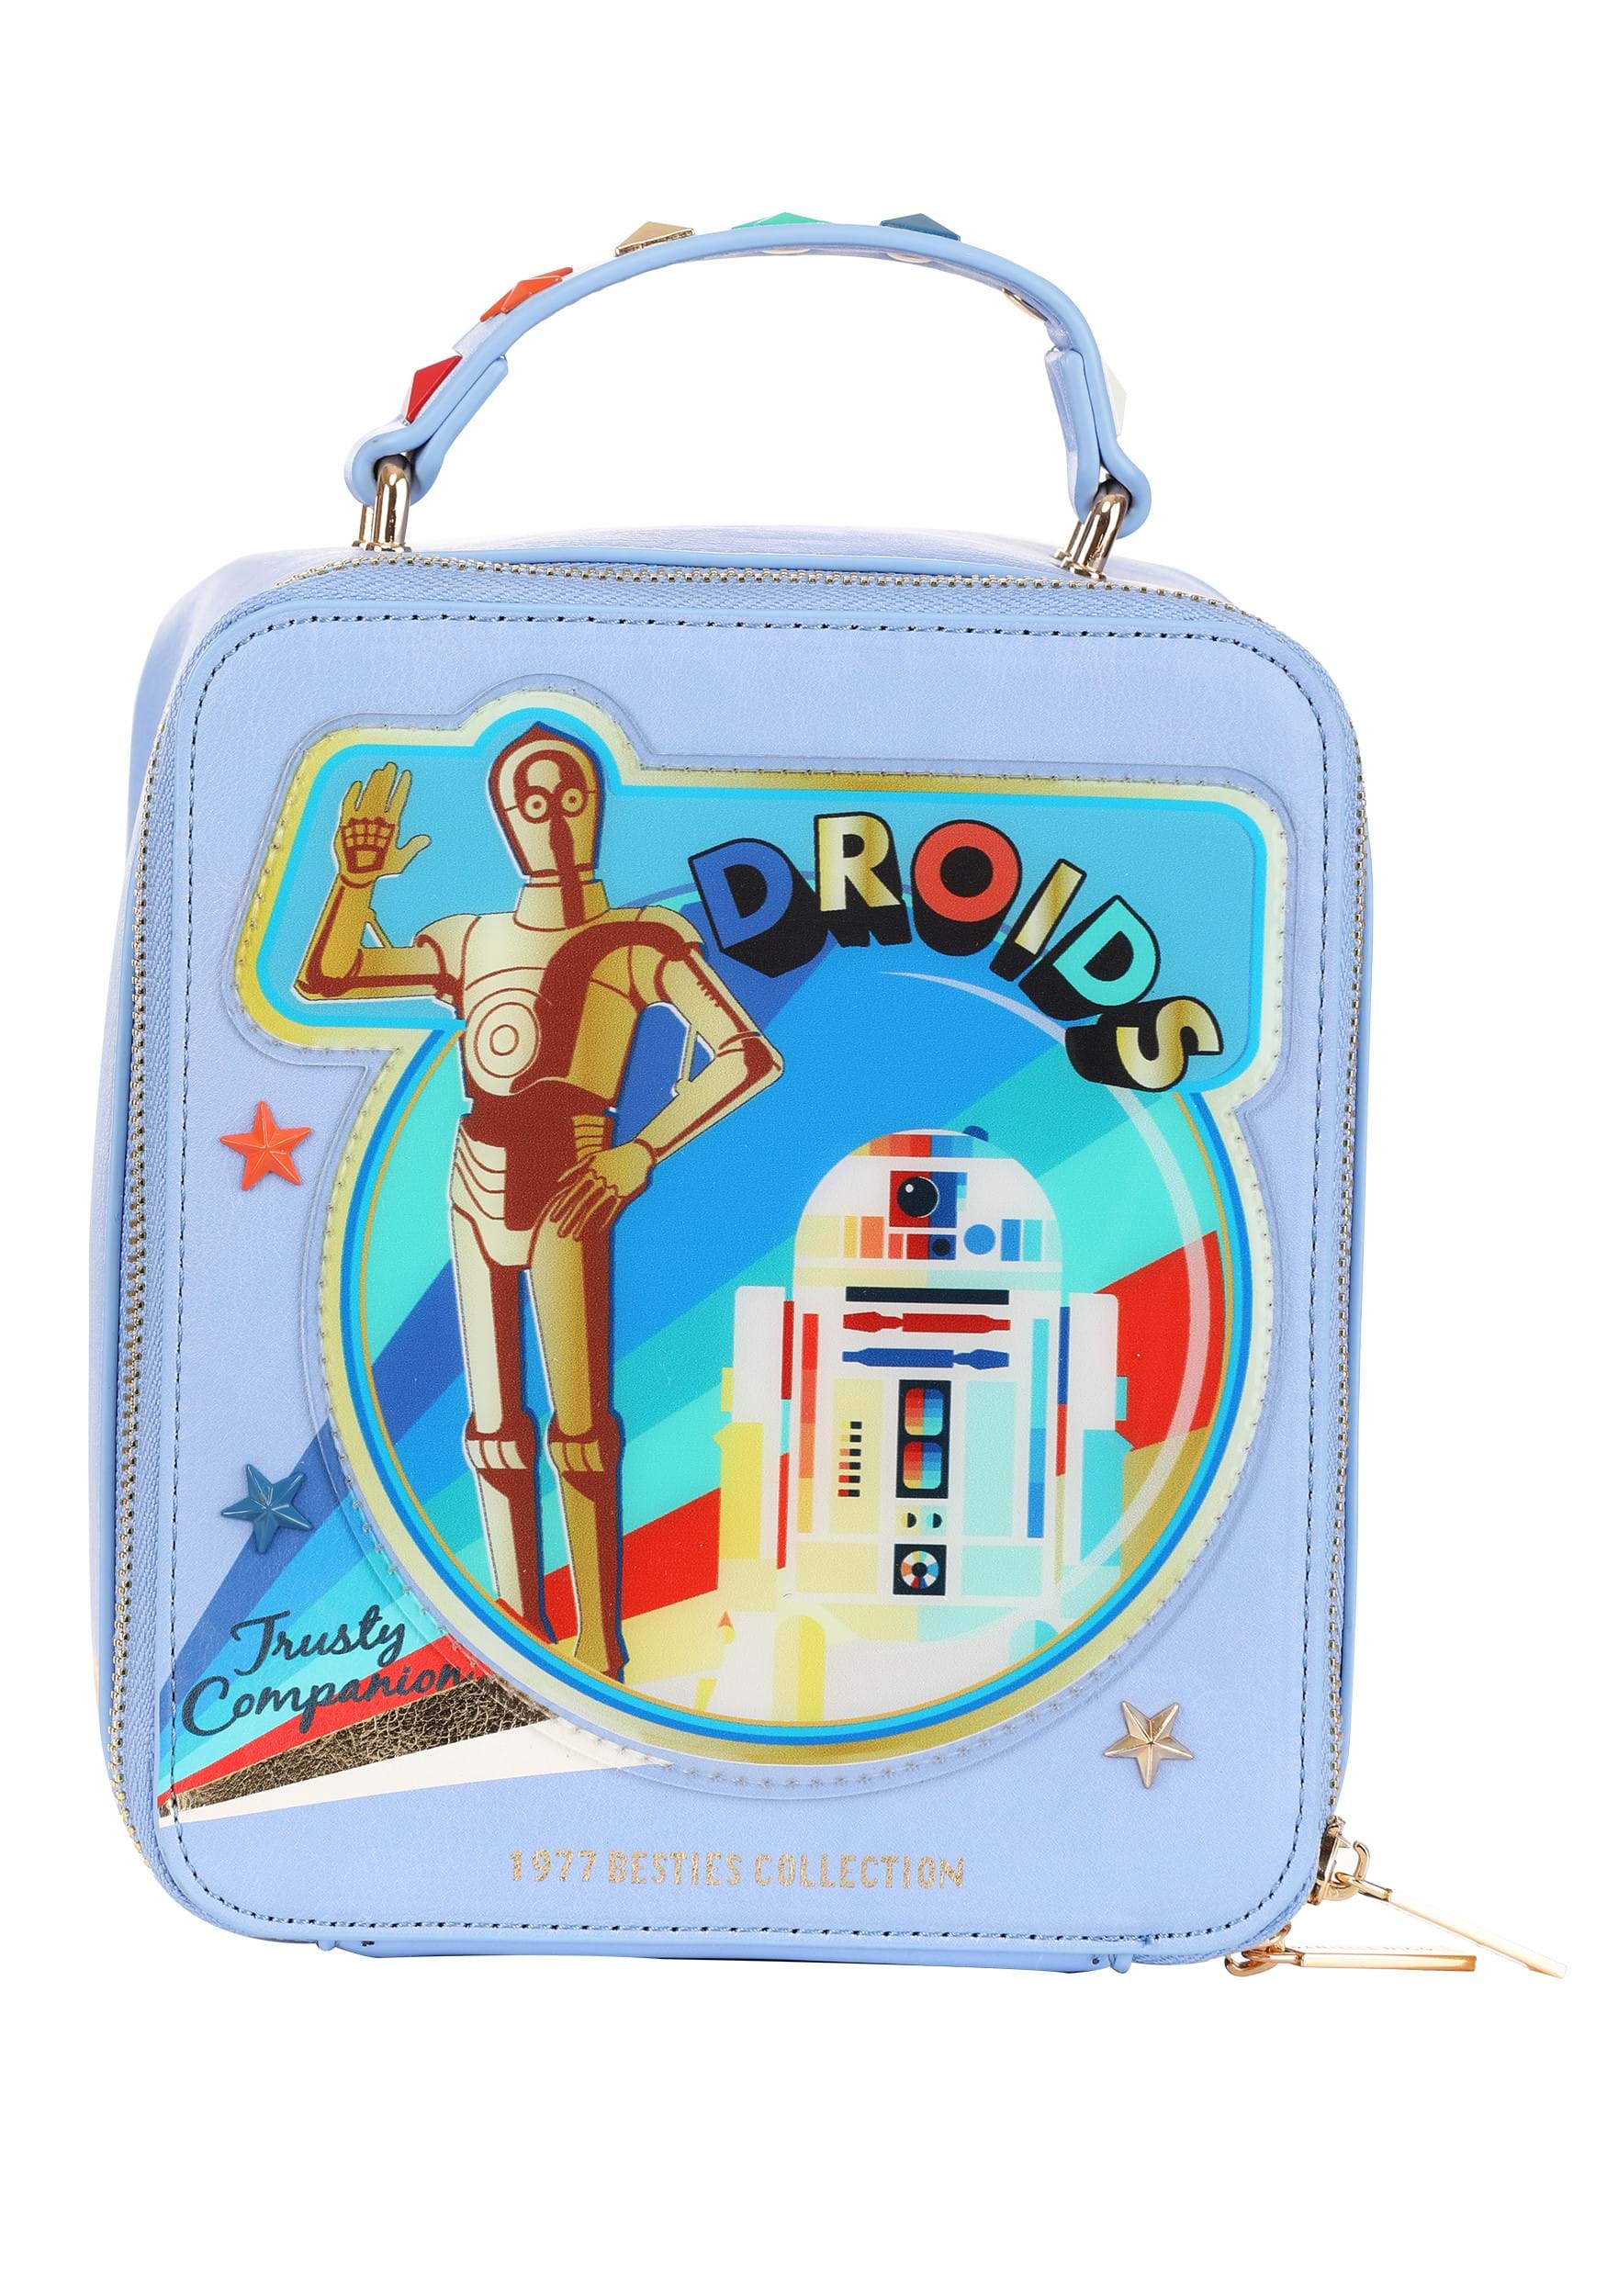 Danielle Nicole Star Wars C-3PO R2-D2 Boxed Collection Crossbody Bag